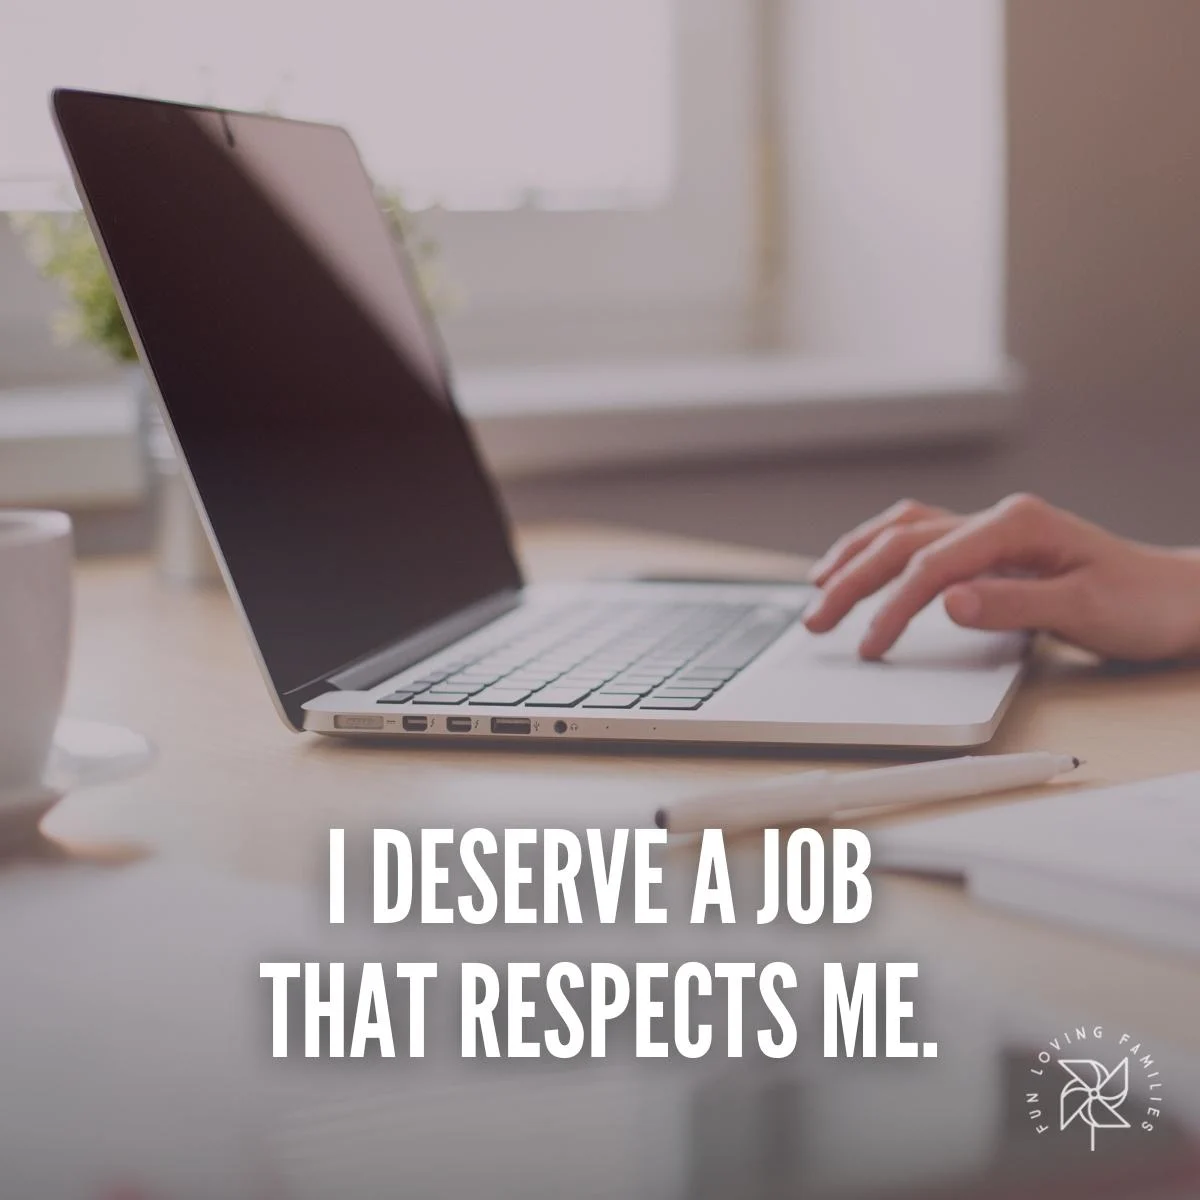 I deserve a job that respects me affirmation